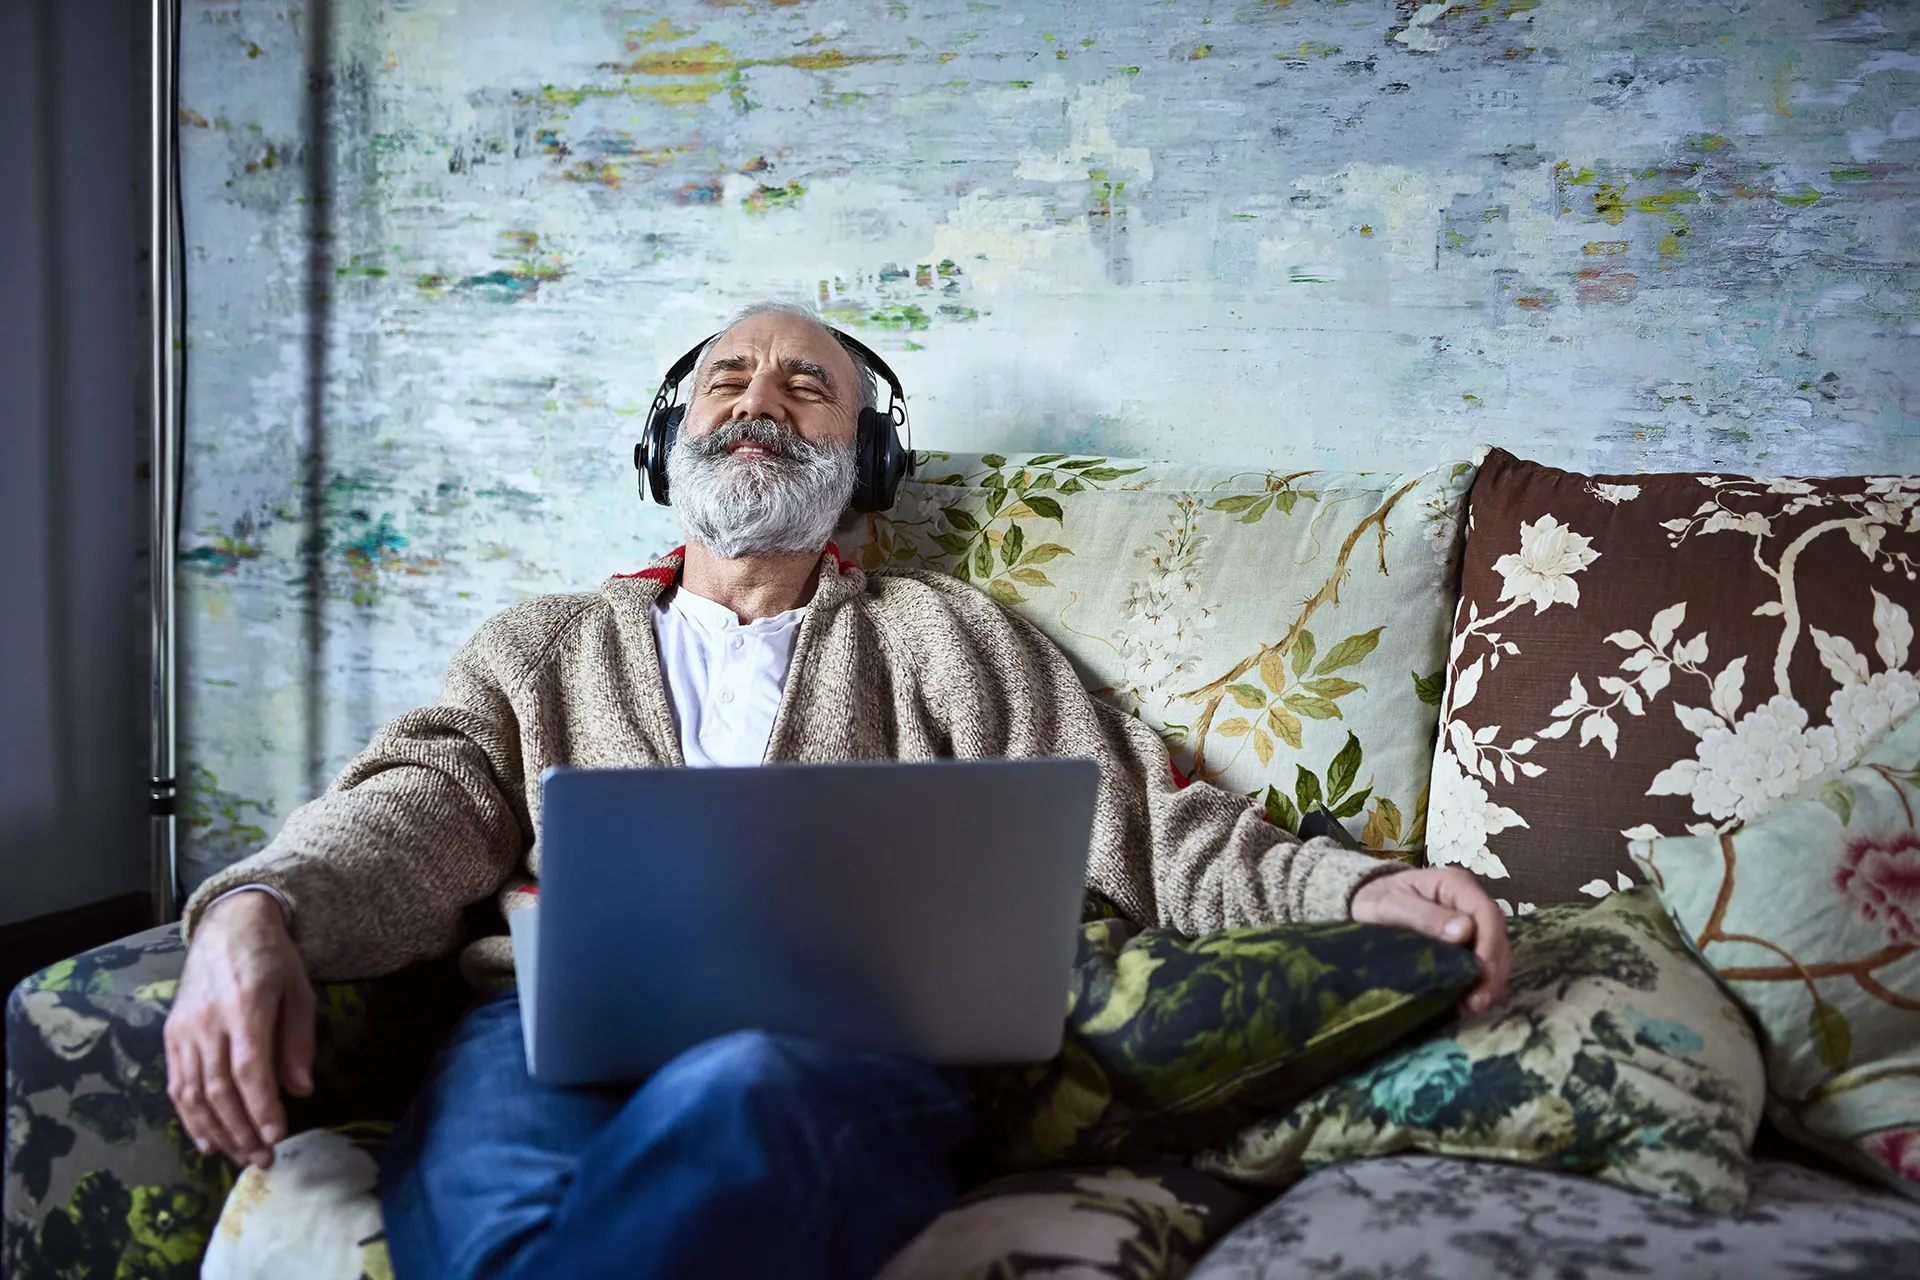 Older man listening to music